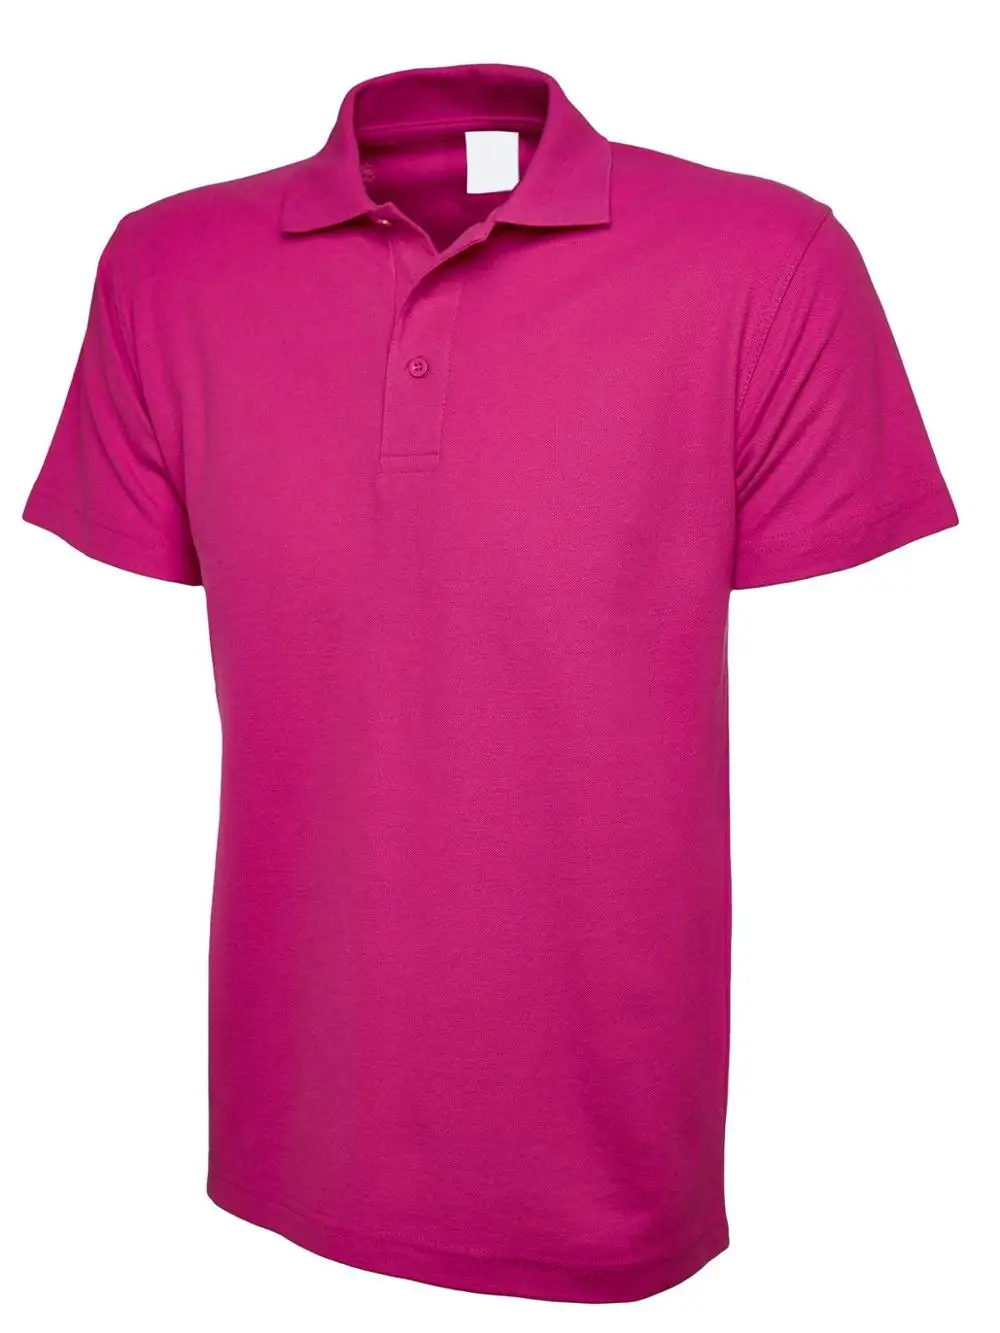 Download High Quality Polo Shirt / Golf Polo Shirt - Buy Original Polo Shirts,Formal Polo Shirts,Office ...